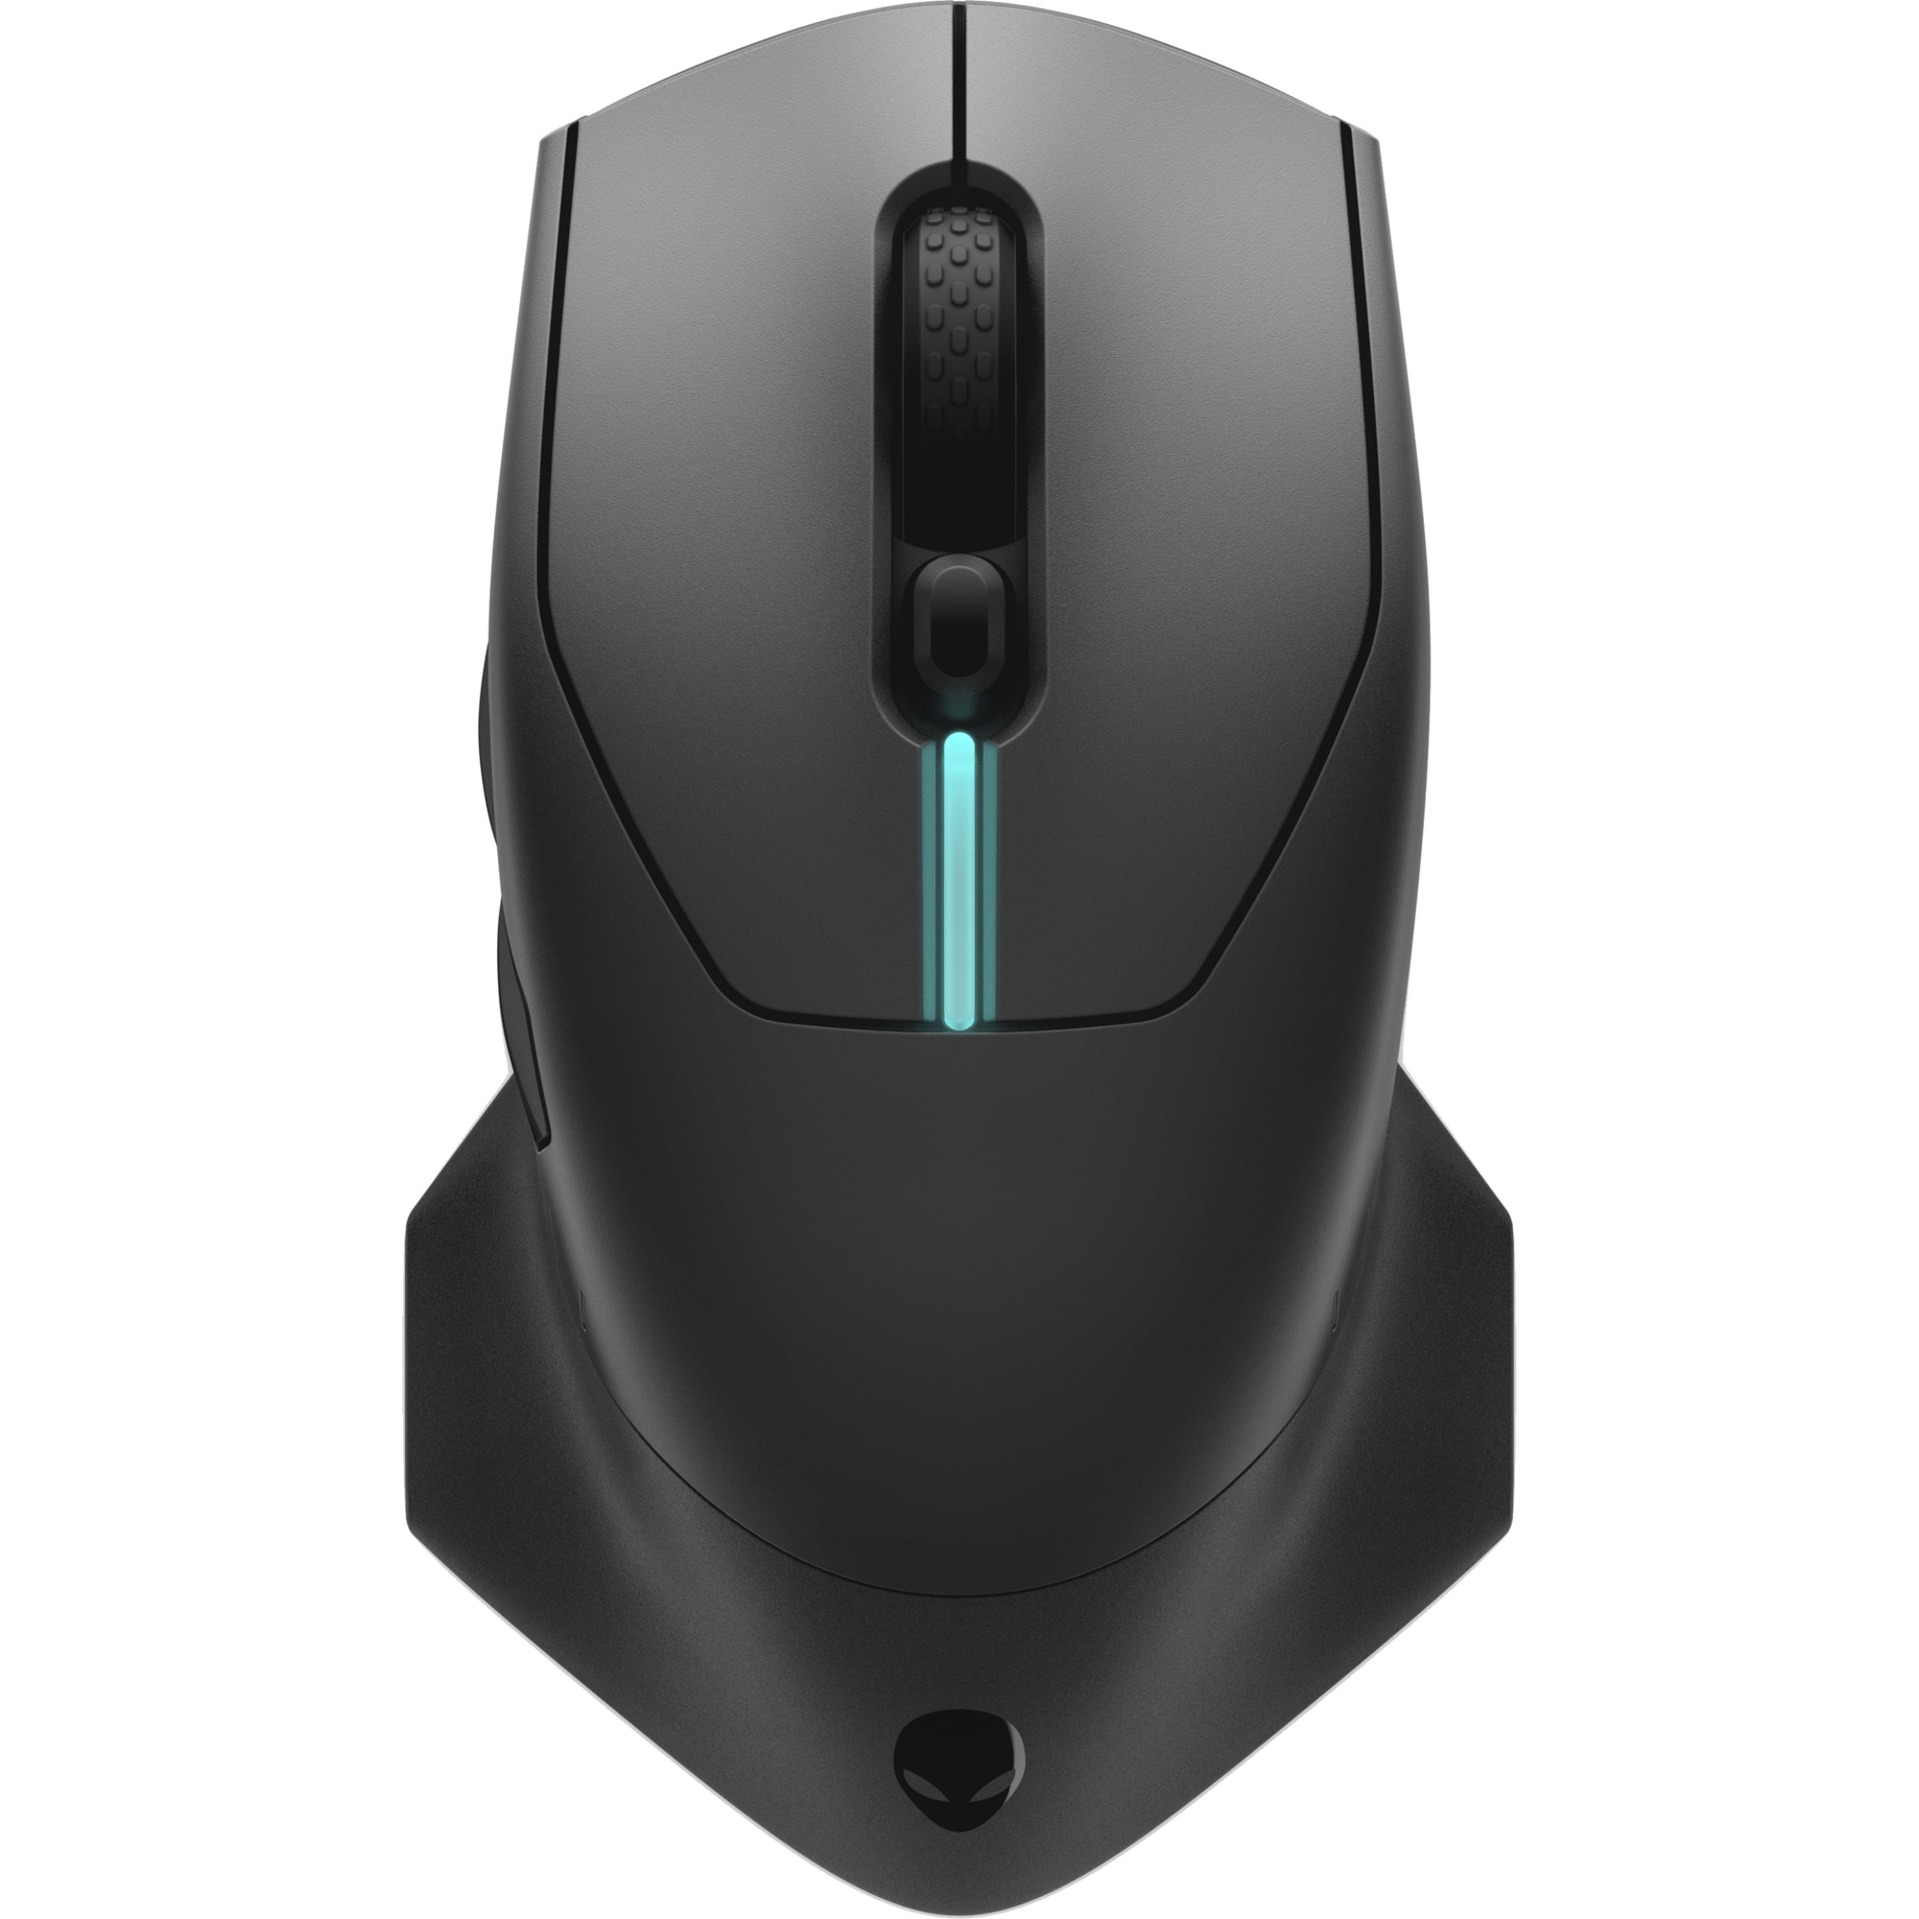 Image of Alternate - Alienware 310M Wireless Gaming Mouse, Gaming-Maus online einkaufen bei Alternate